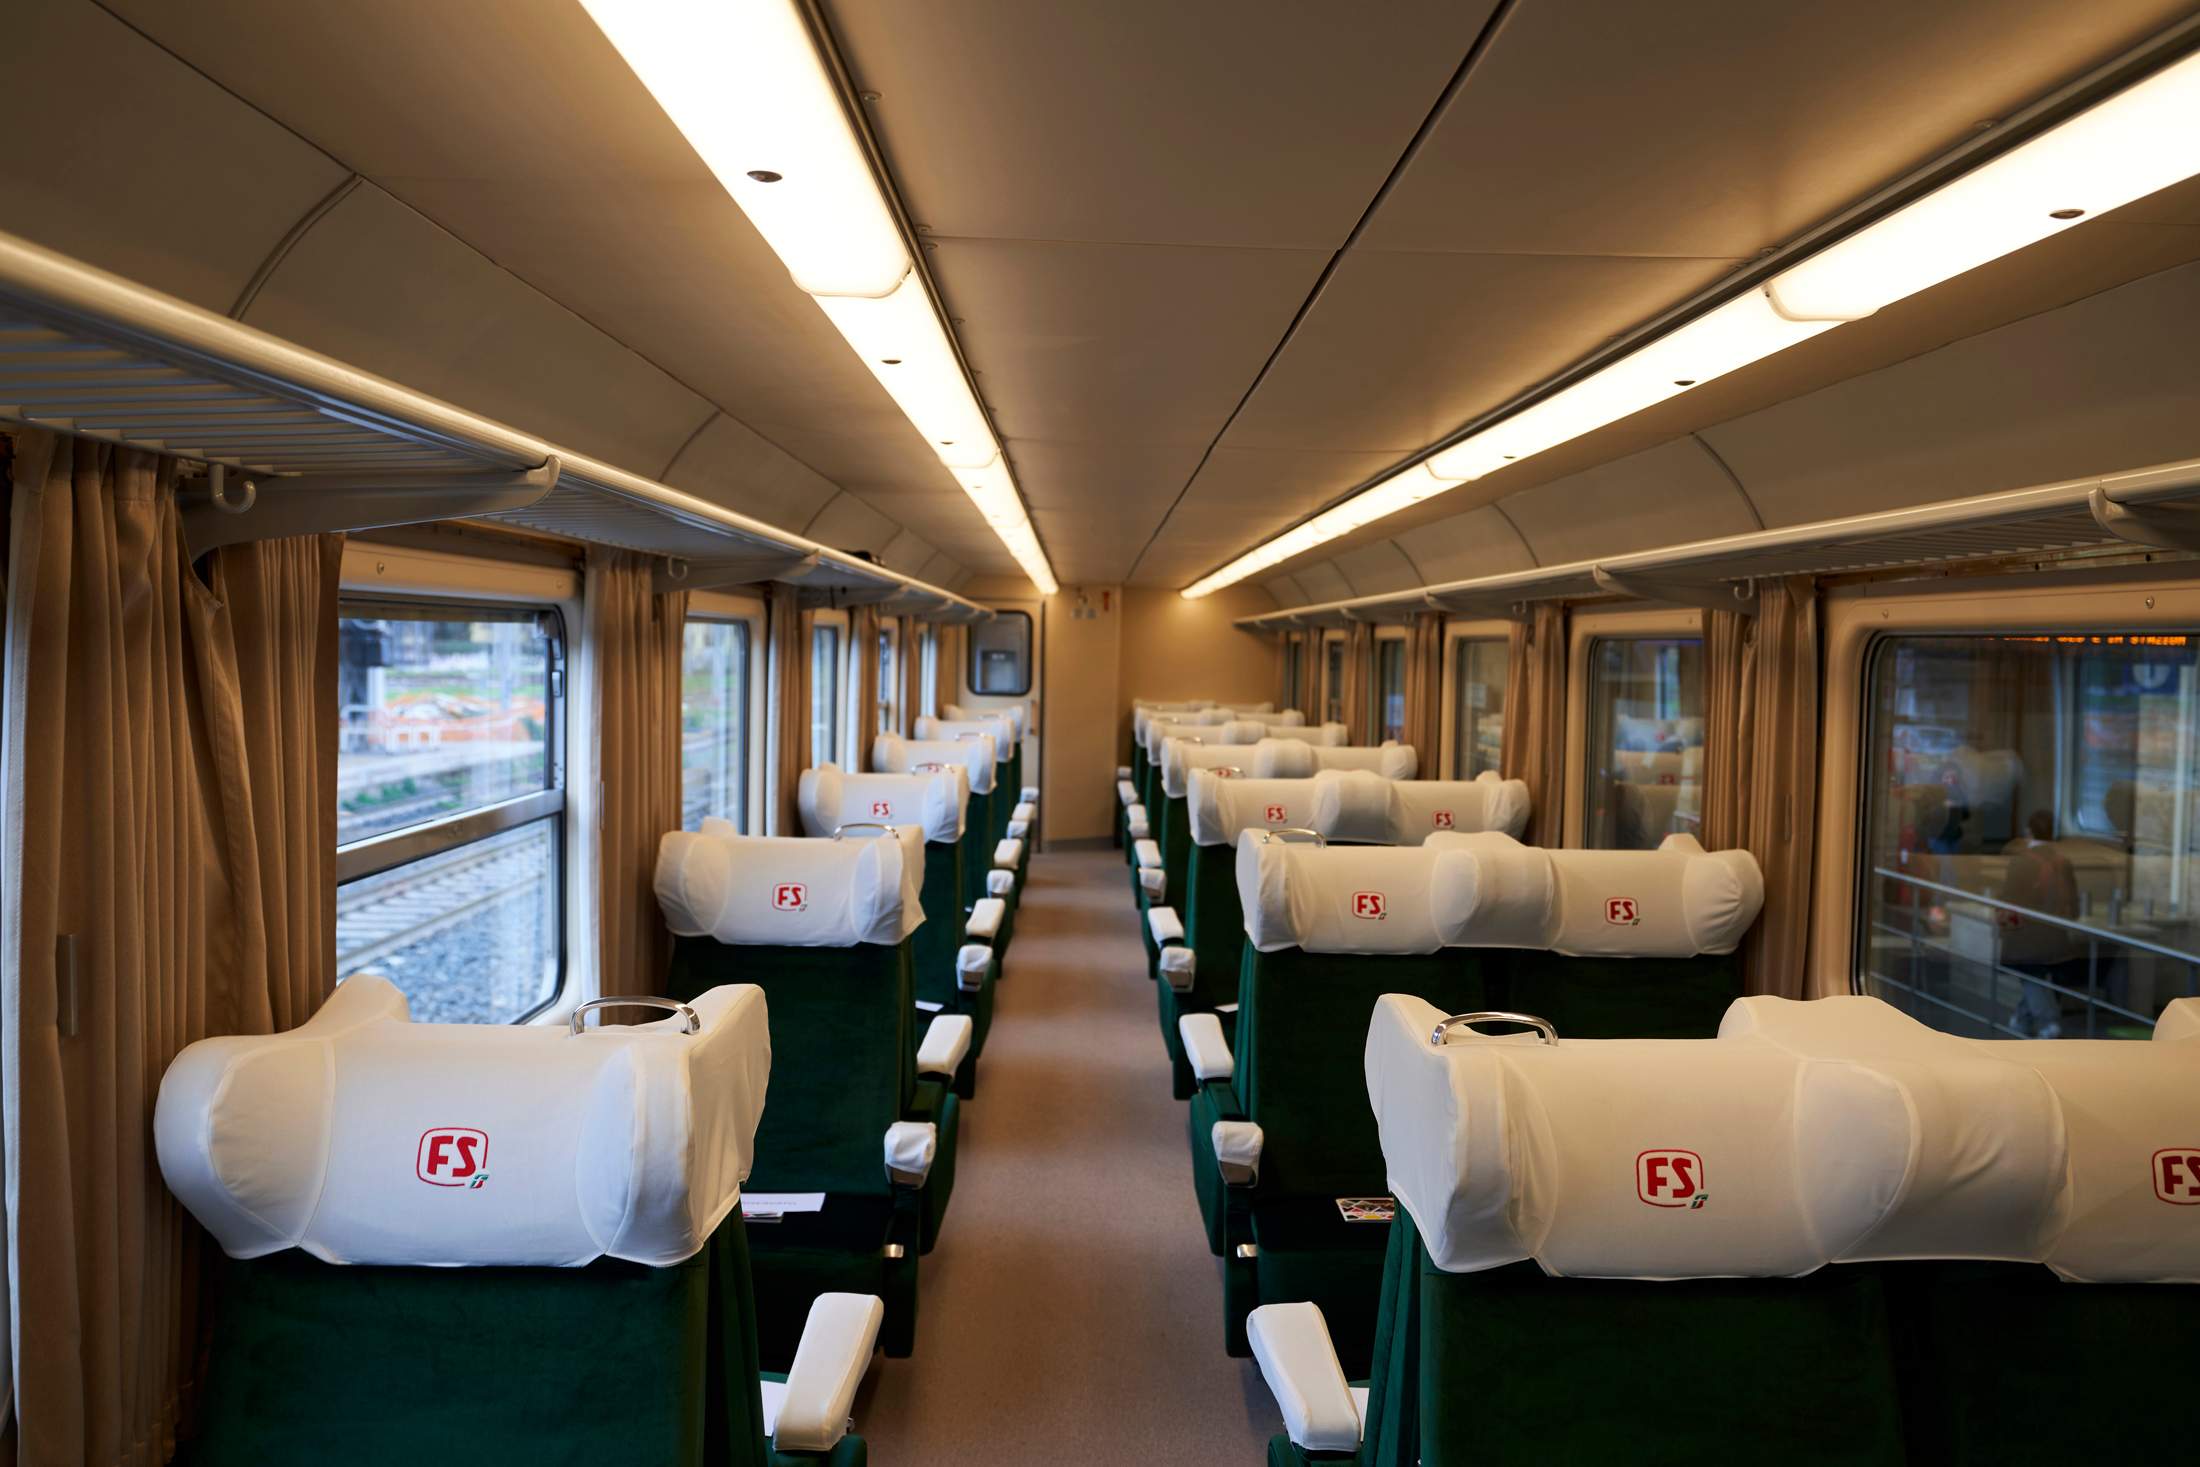 23-03-09_harlequin-train_rome_0021.jpg